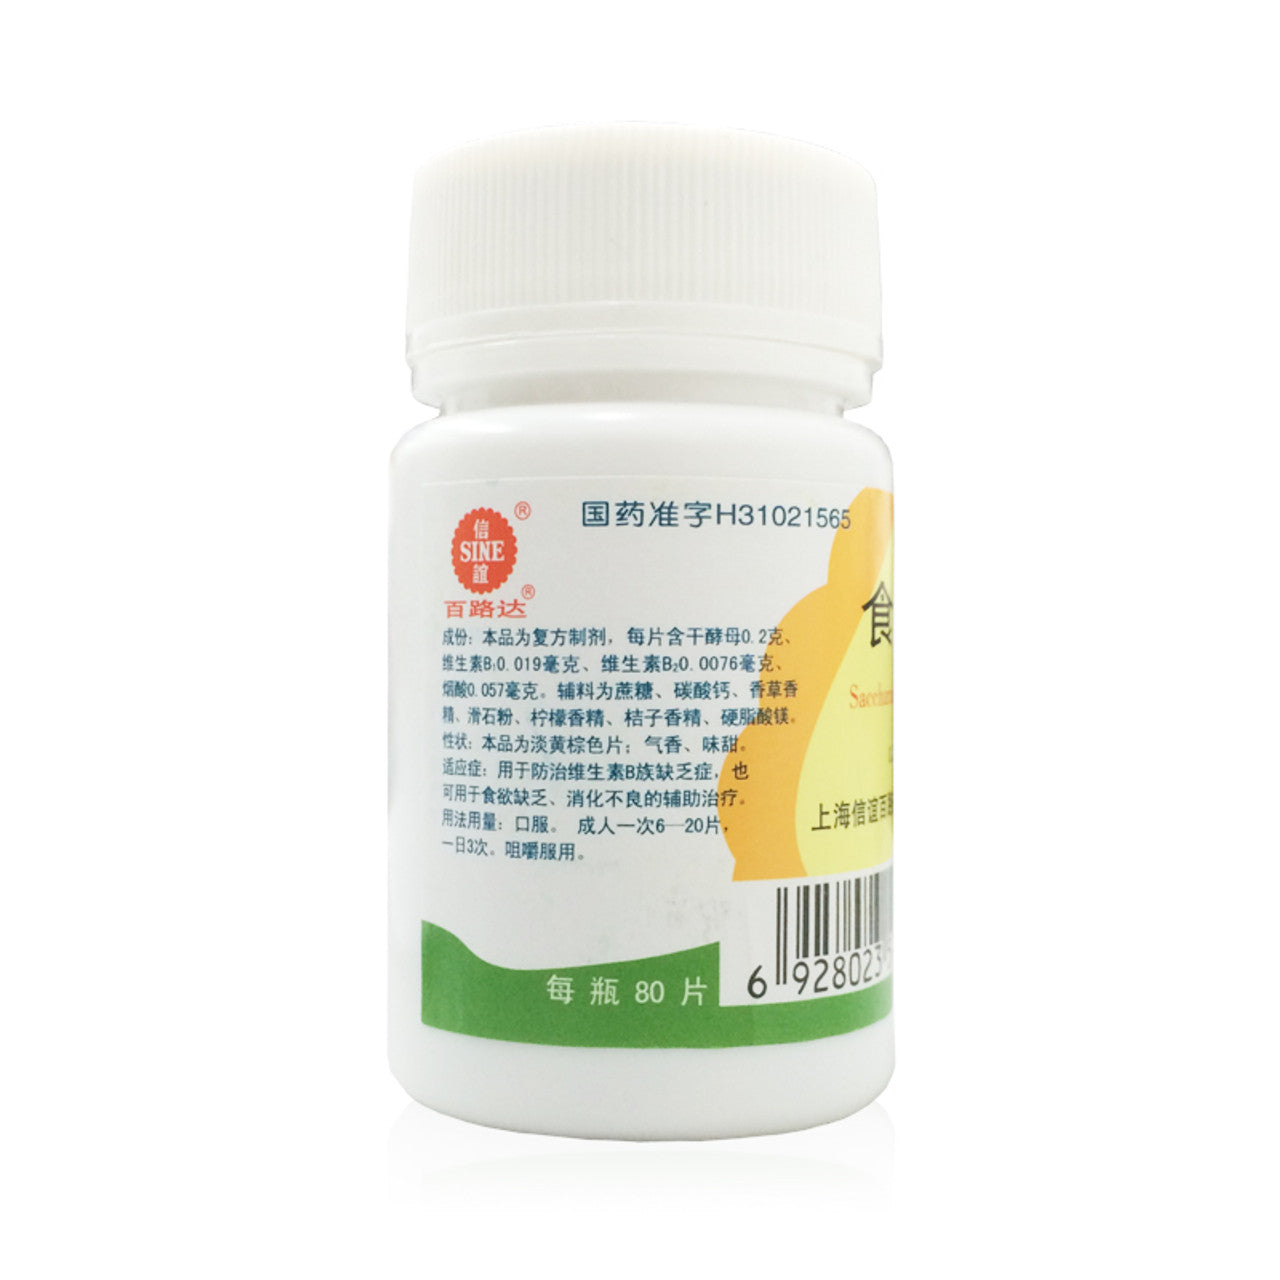 Saccharated Yeast Tablets  or Shimusheng Pian or Shimusheng Tabets for Indigestion. Shi Mu Sheng Pian. 0.2g*80 Tablets*5 boxes